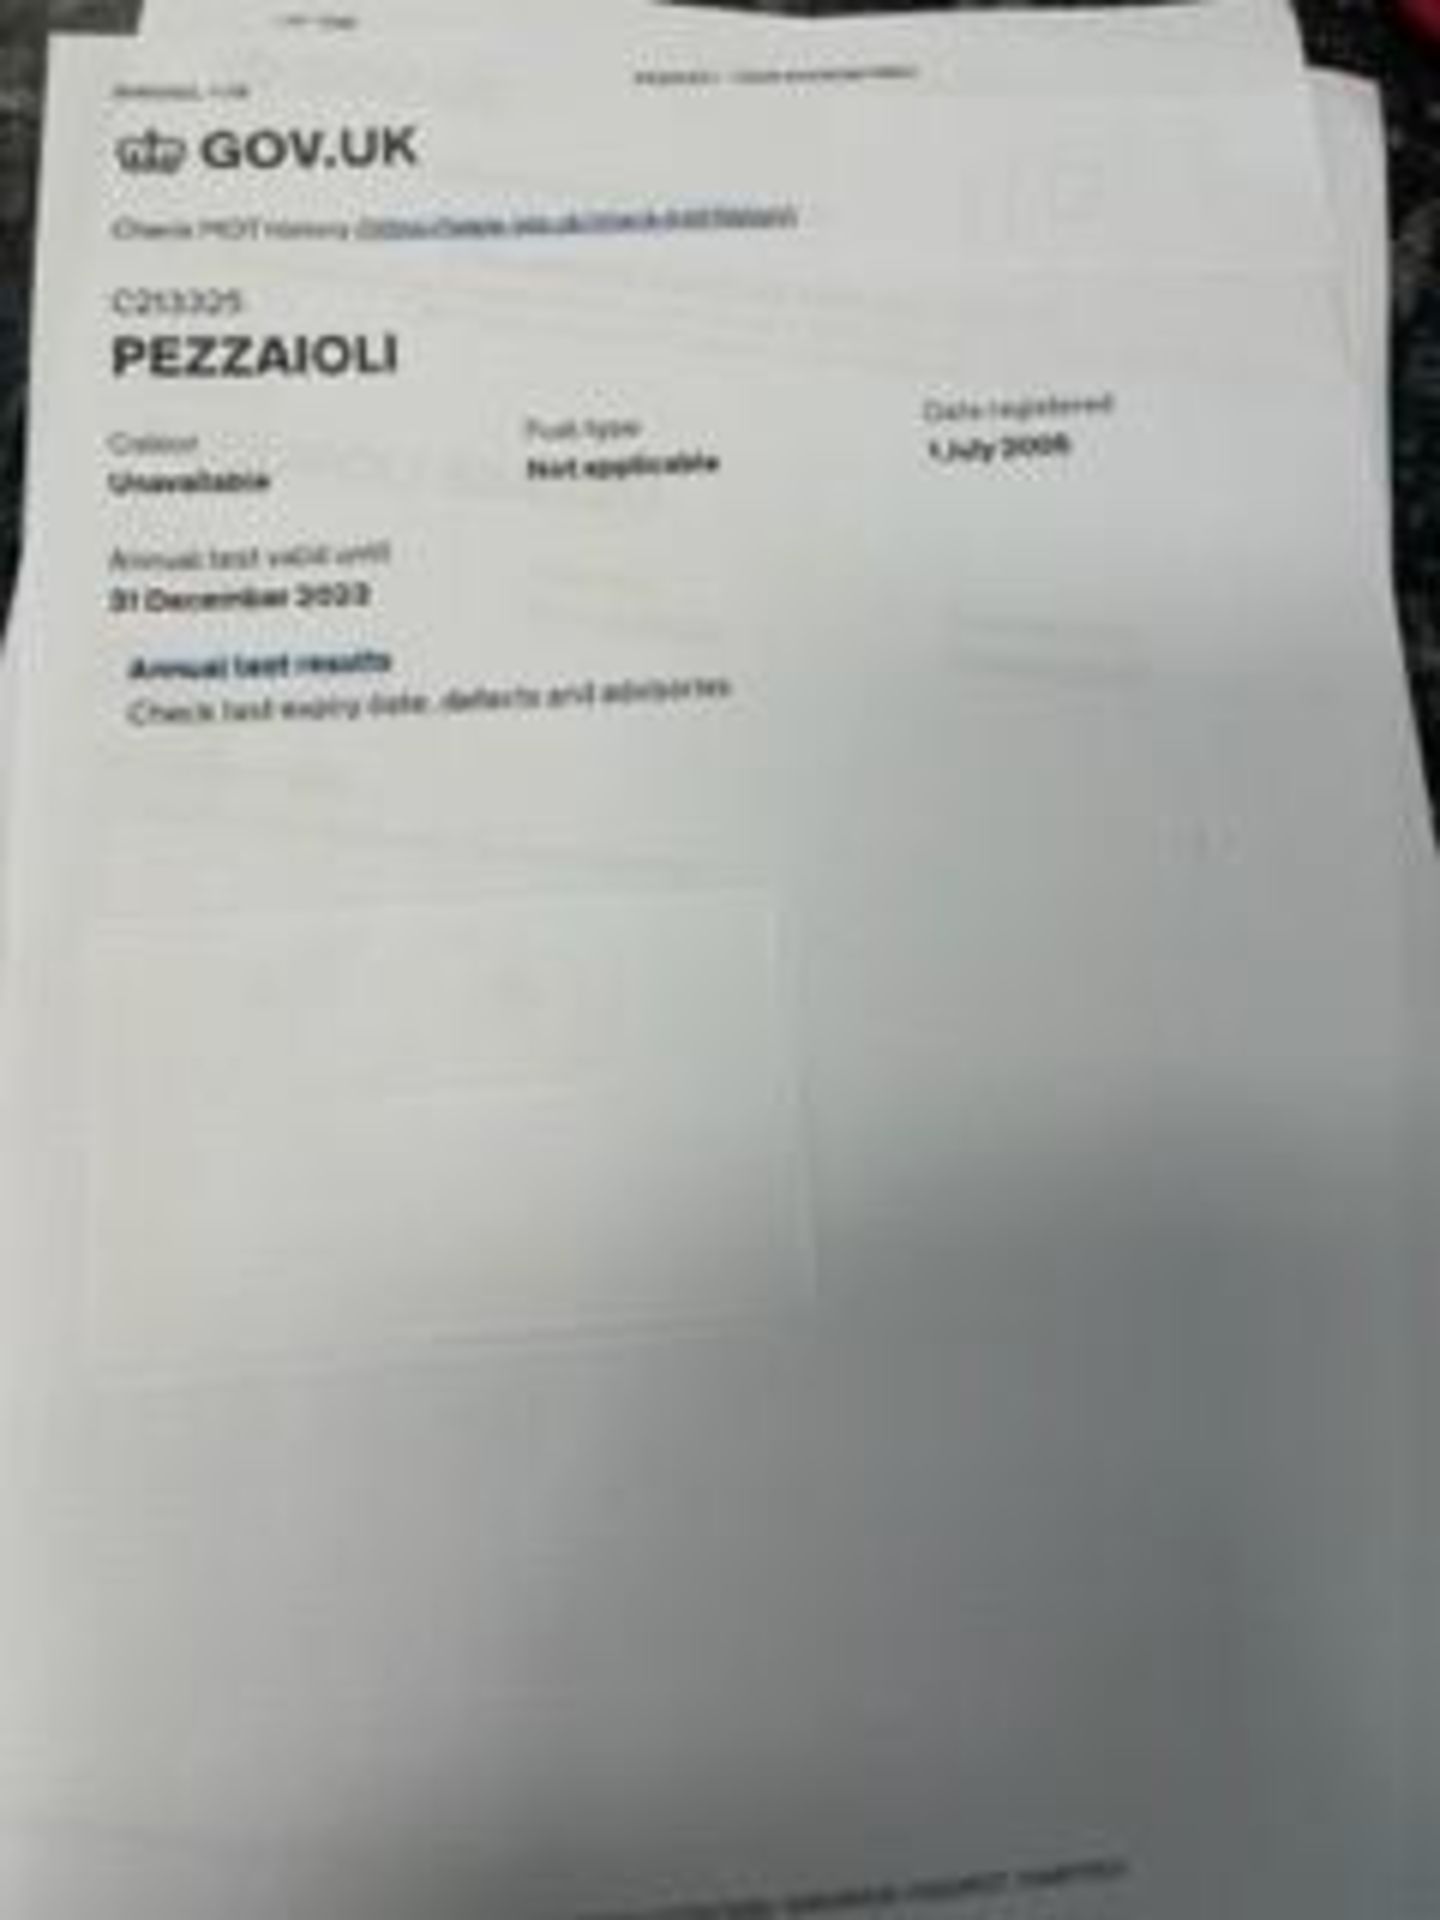 PEZZAIOLI LIVESTOCK TRAILER - Image 5 of 21